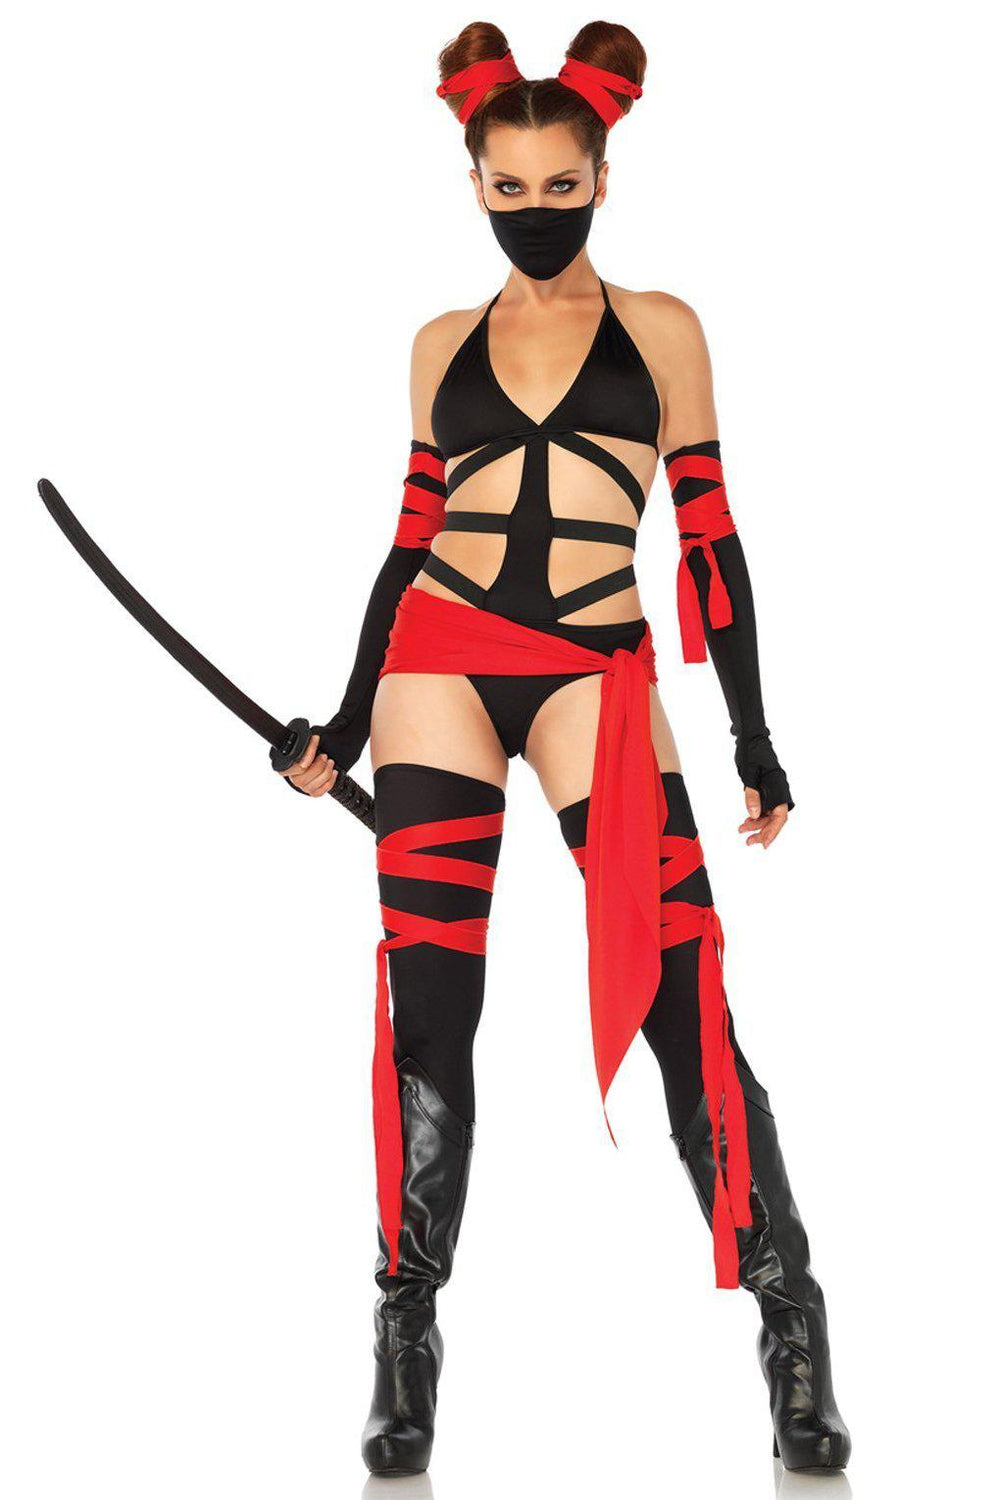 Killer Ninja Costume-Villian Costumes-Leg Avenue-SEXYSHOES.COM